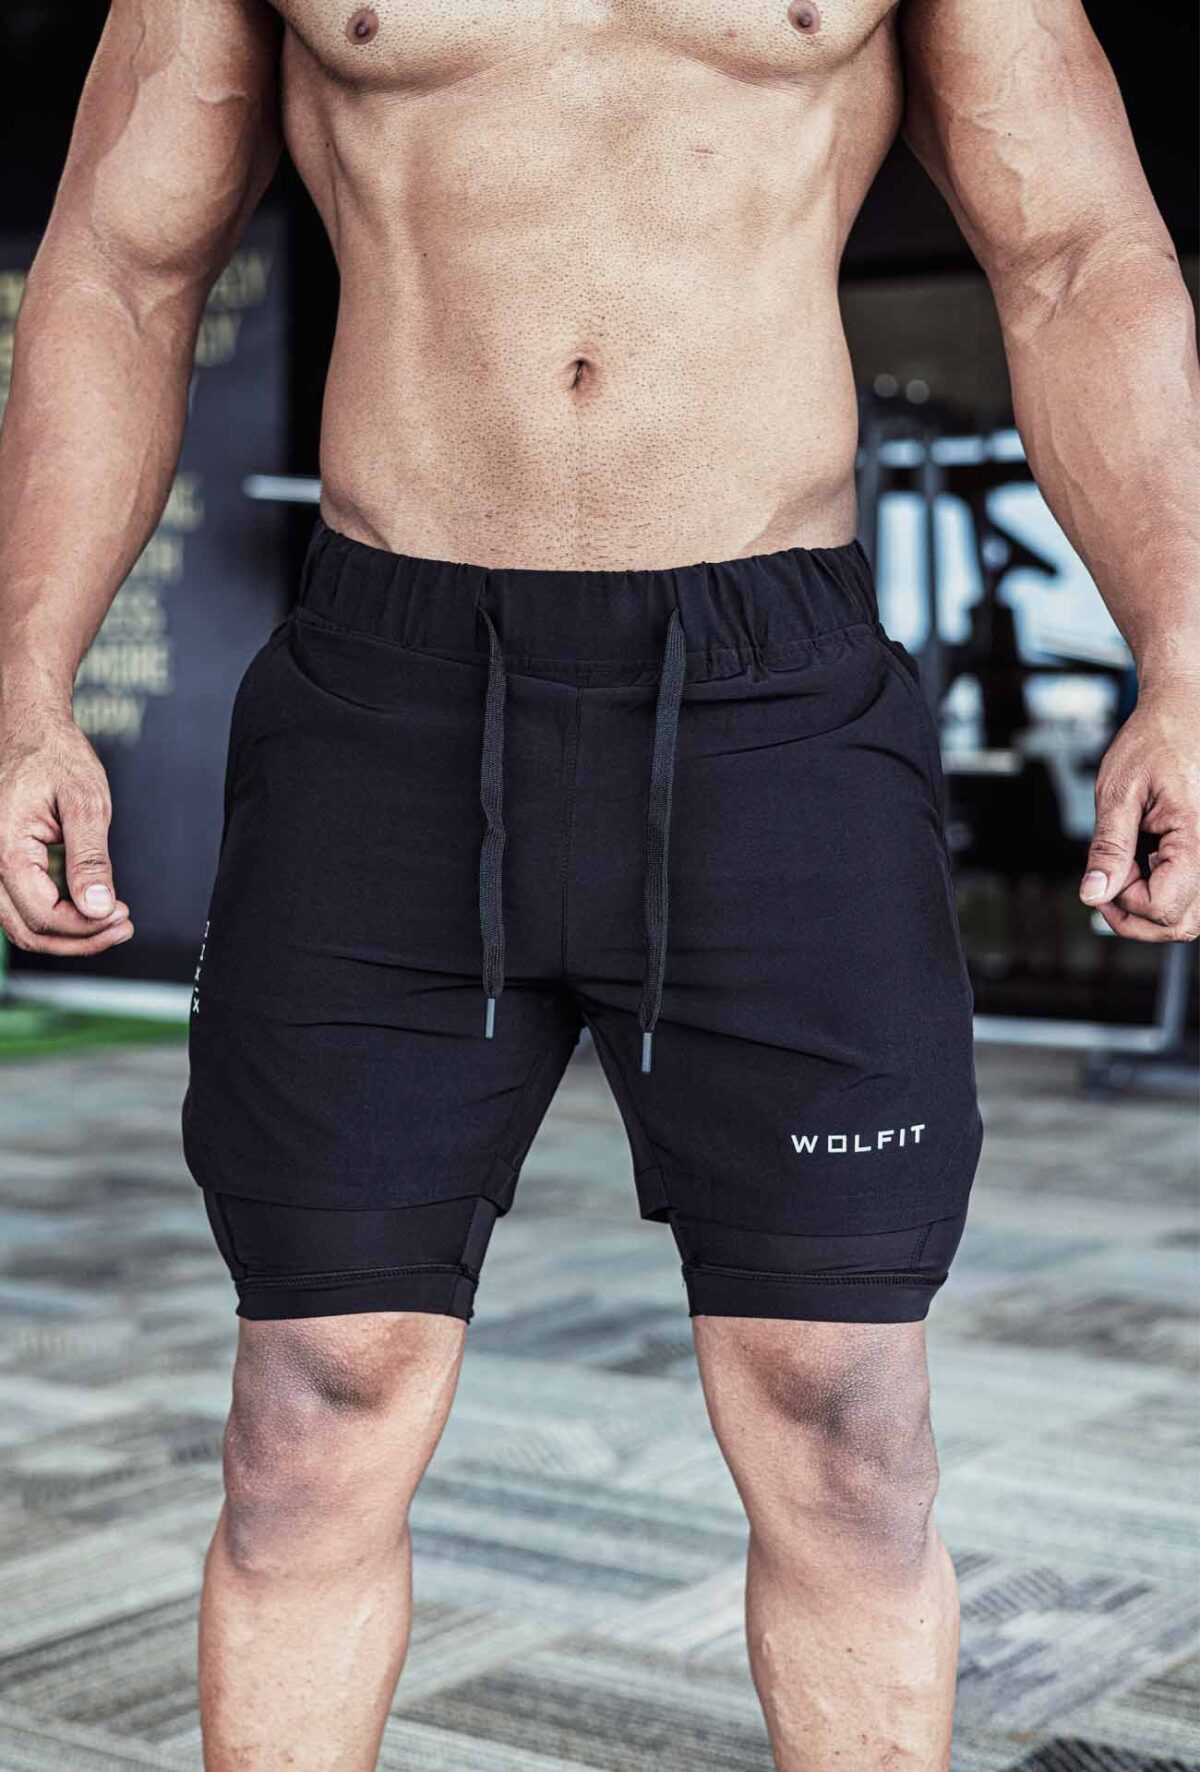 wolfit-black-shorts-compression